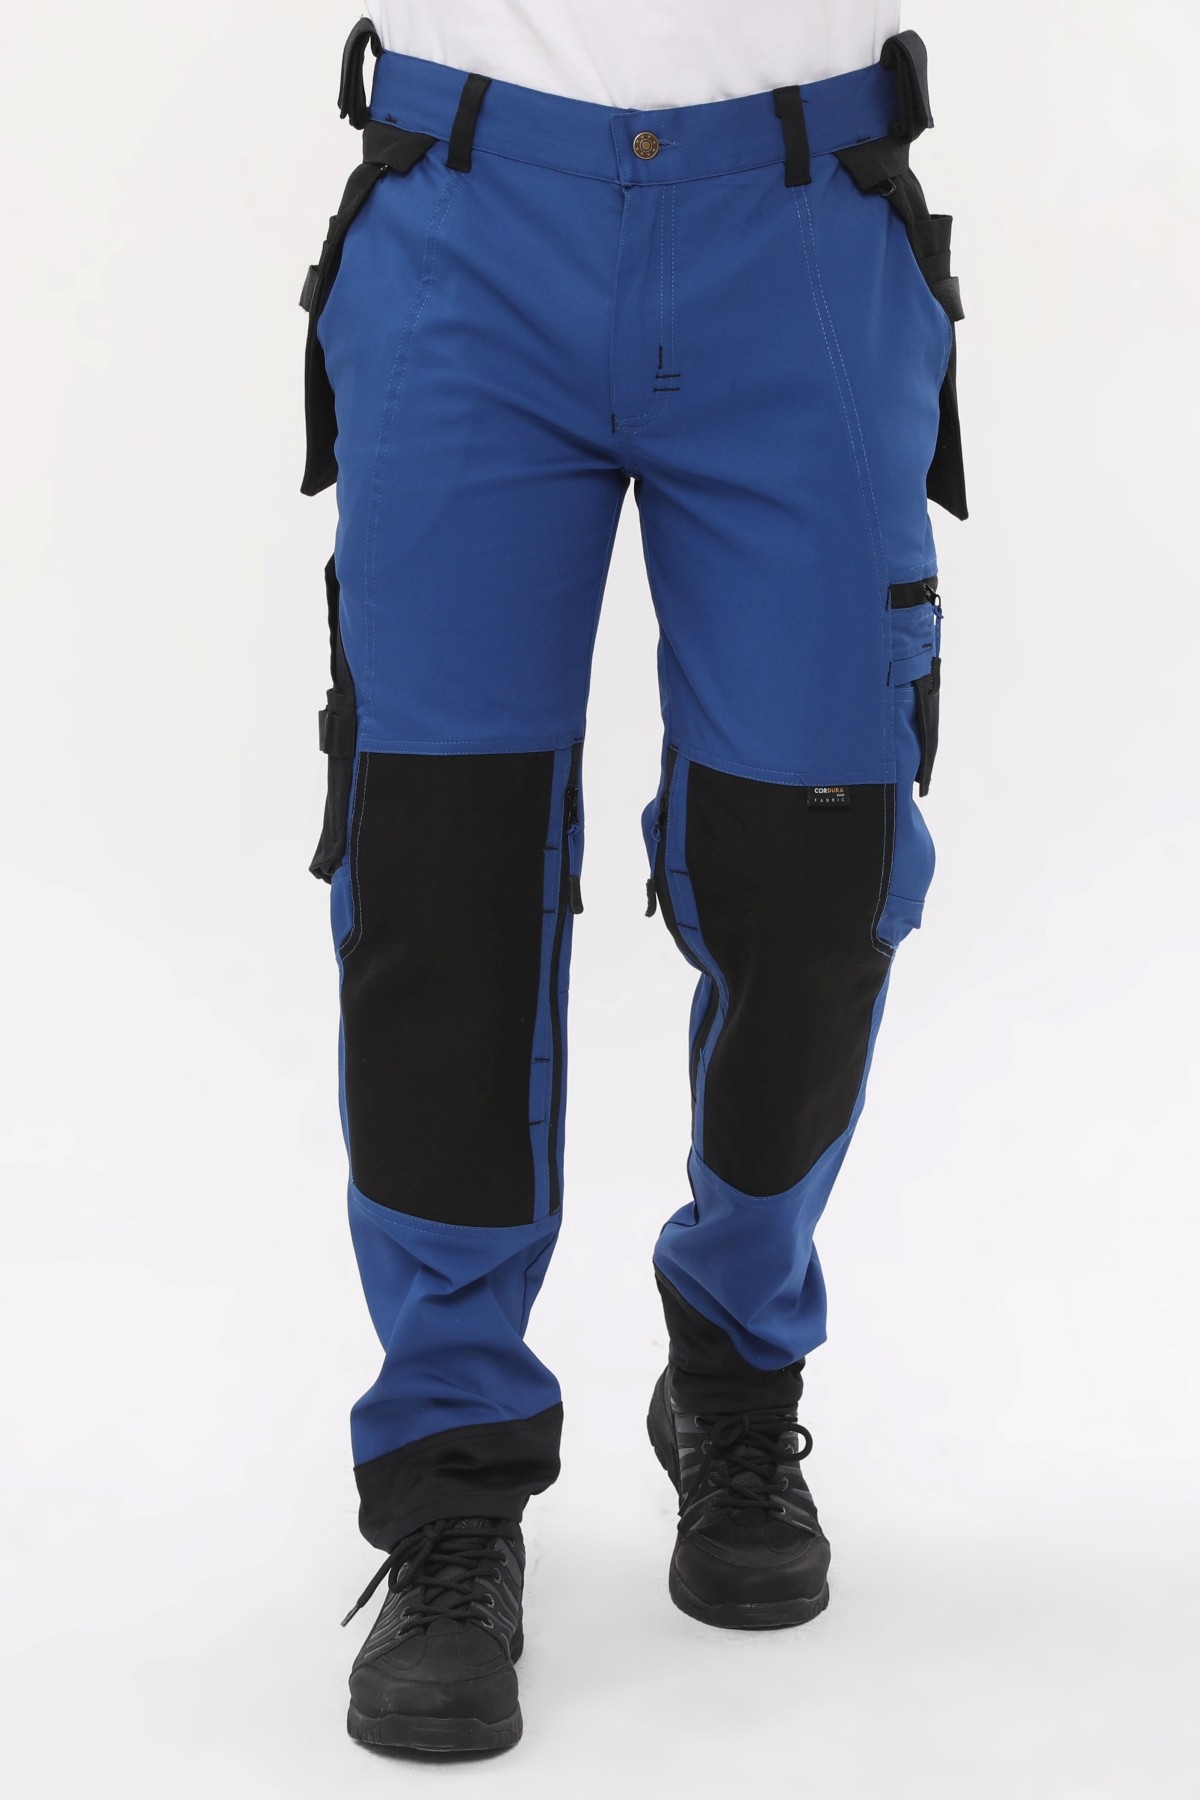 Uniprom İş Pantolonu Likralı Manchester Model Mavi-Siyah